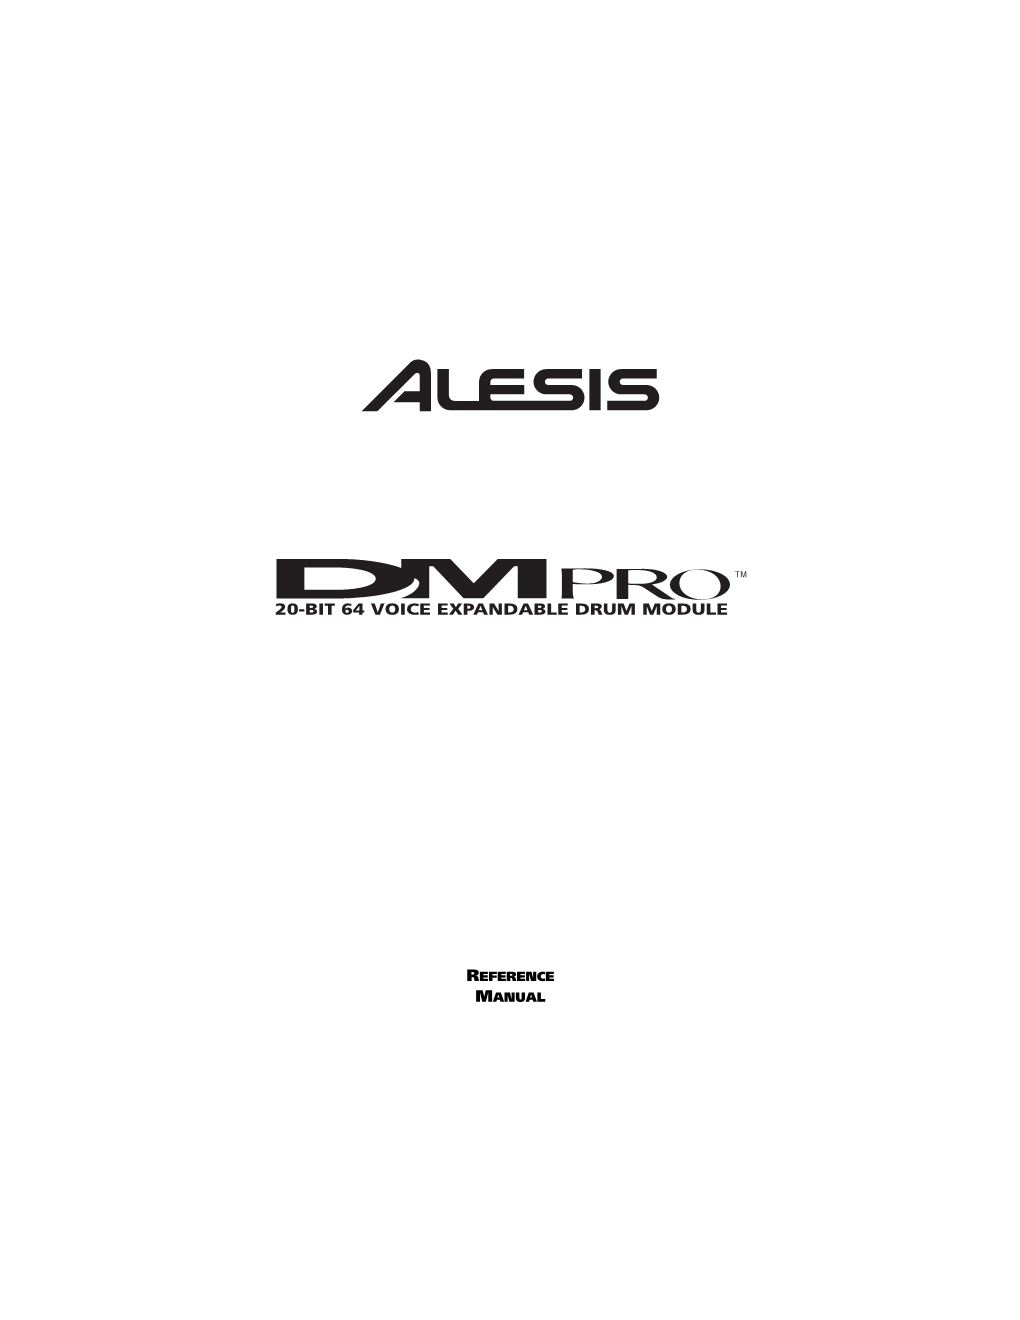 Alesis DM Protm Reference Manual by Erik Norlander